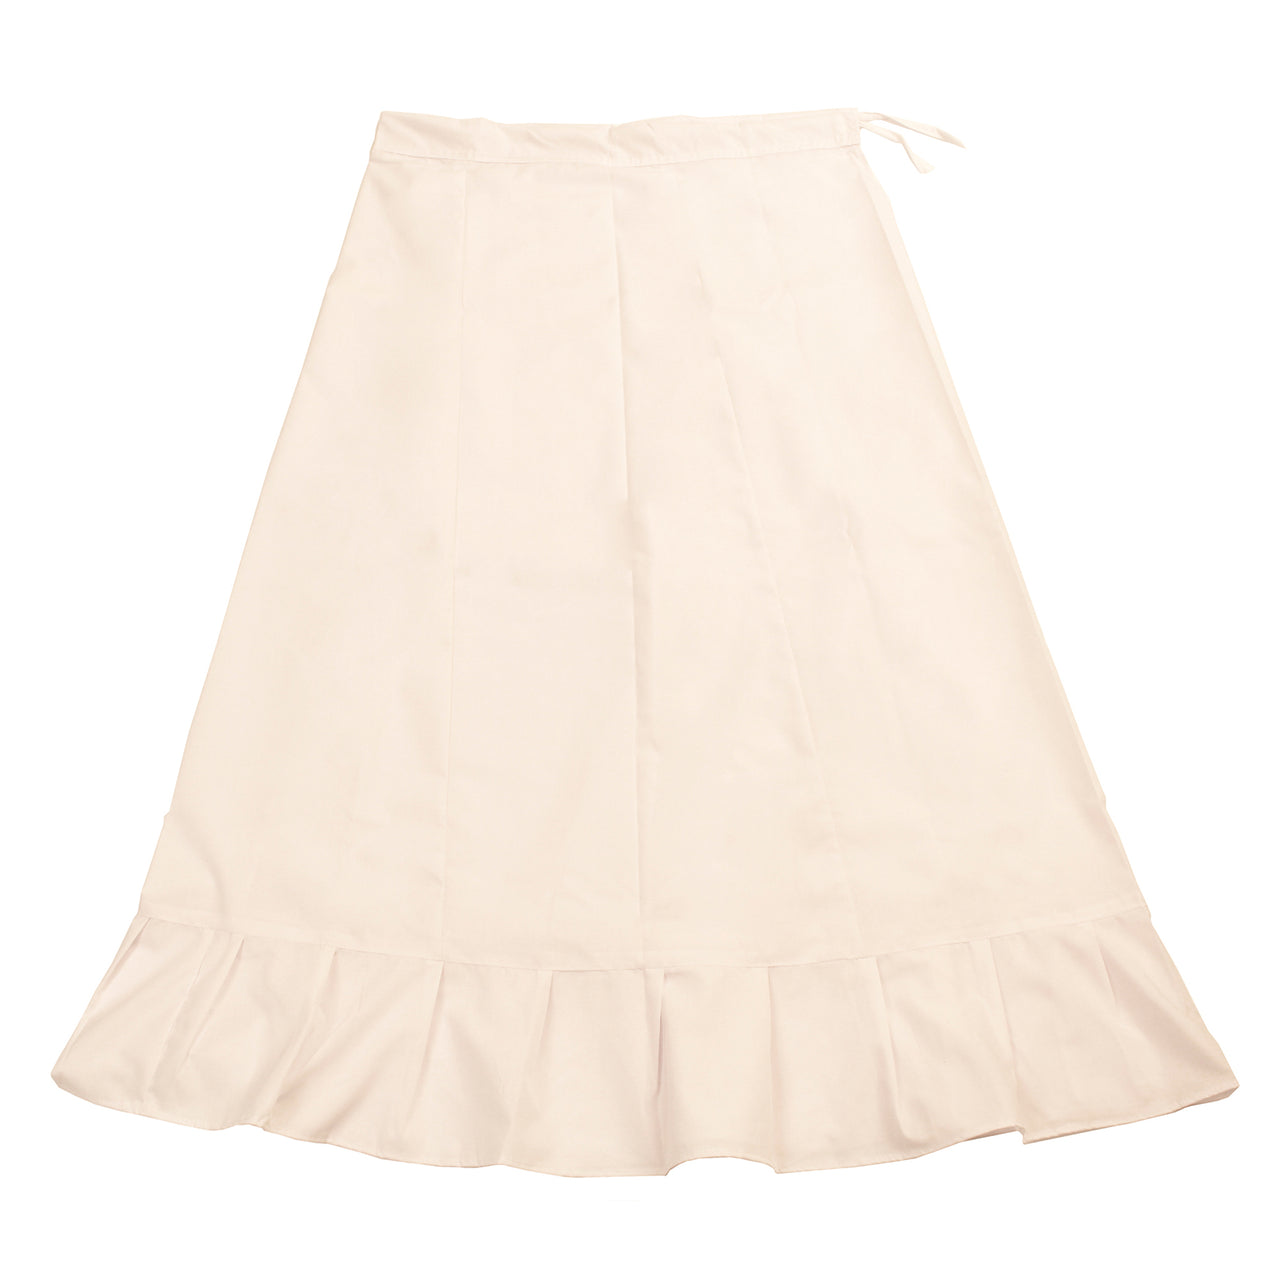 White - Sari (Saree) Petticoat - Available in S, M, L & XL - Underskirts For Sari's